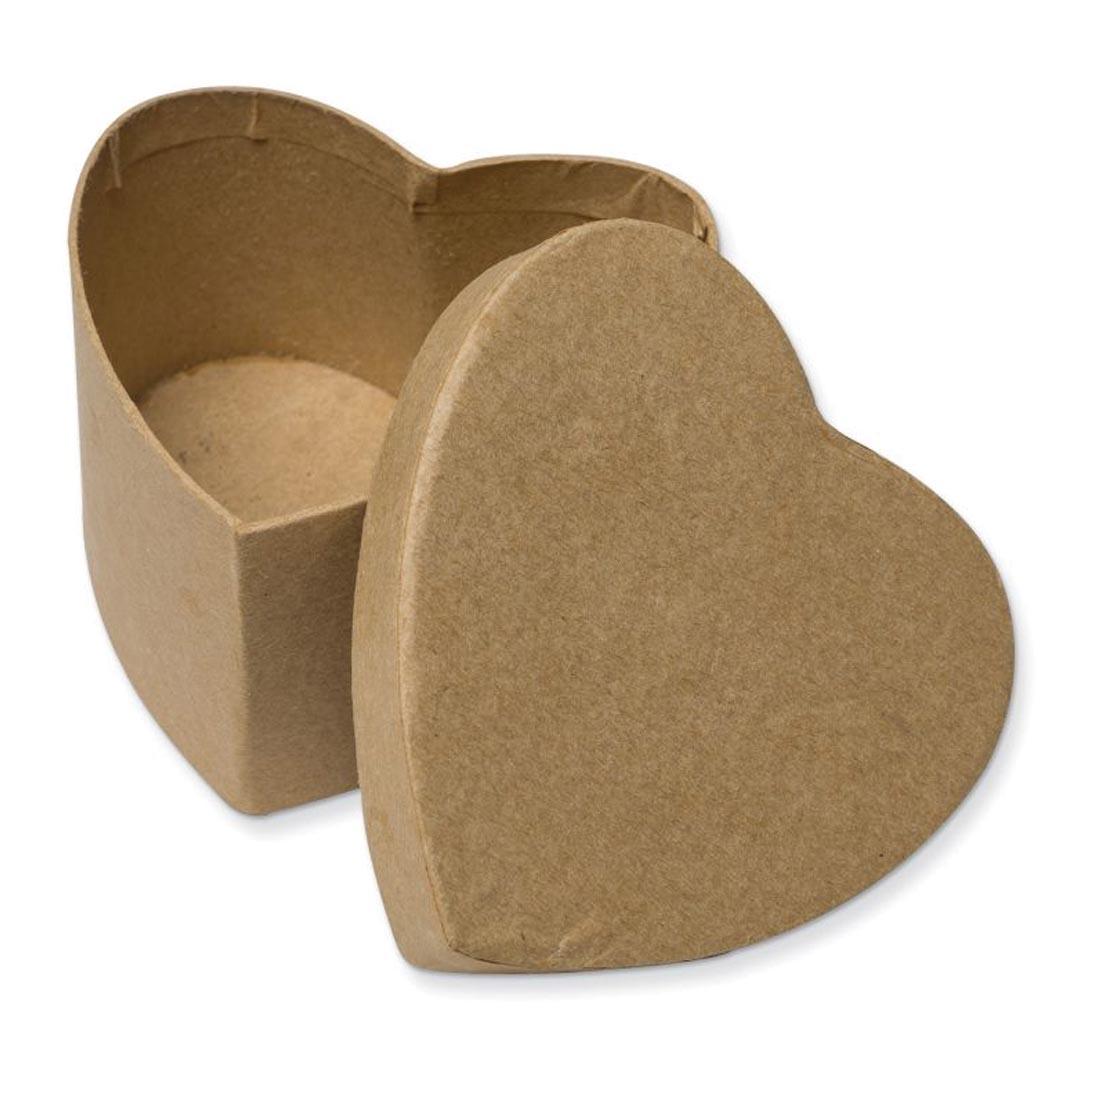 Creativity Street Papier Mache Heart Box with lid off